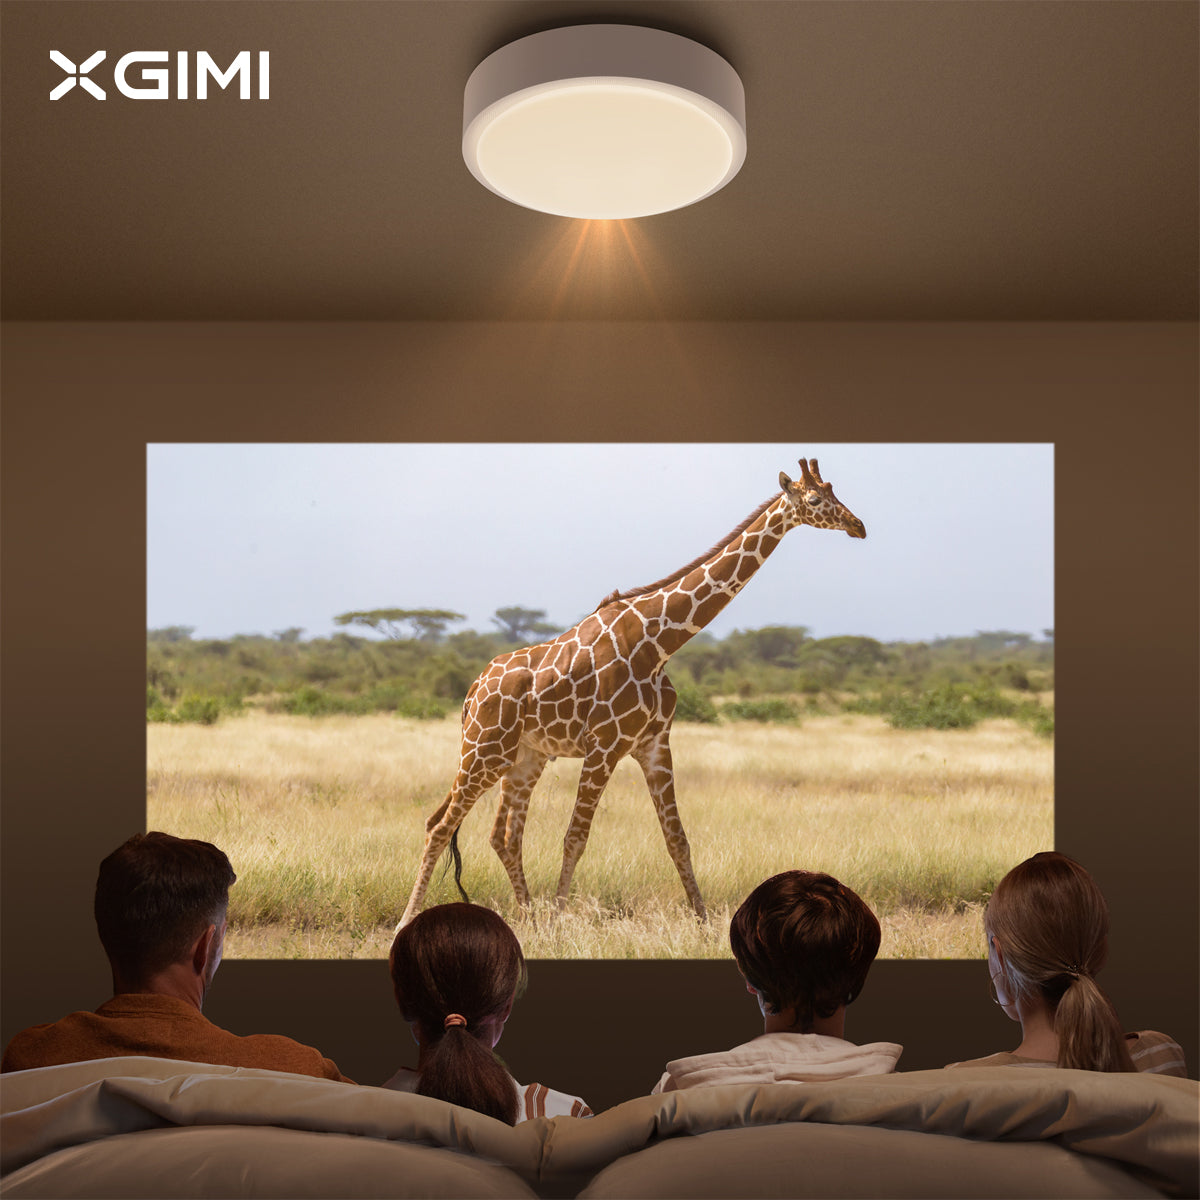 XGIMI Reveals New Innovative Magic Lamp Projector